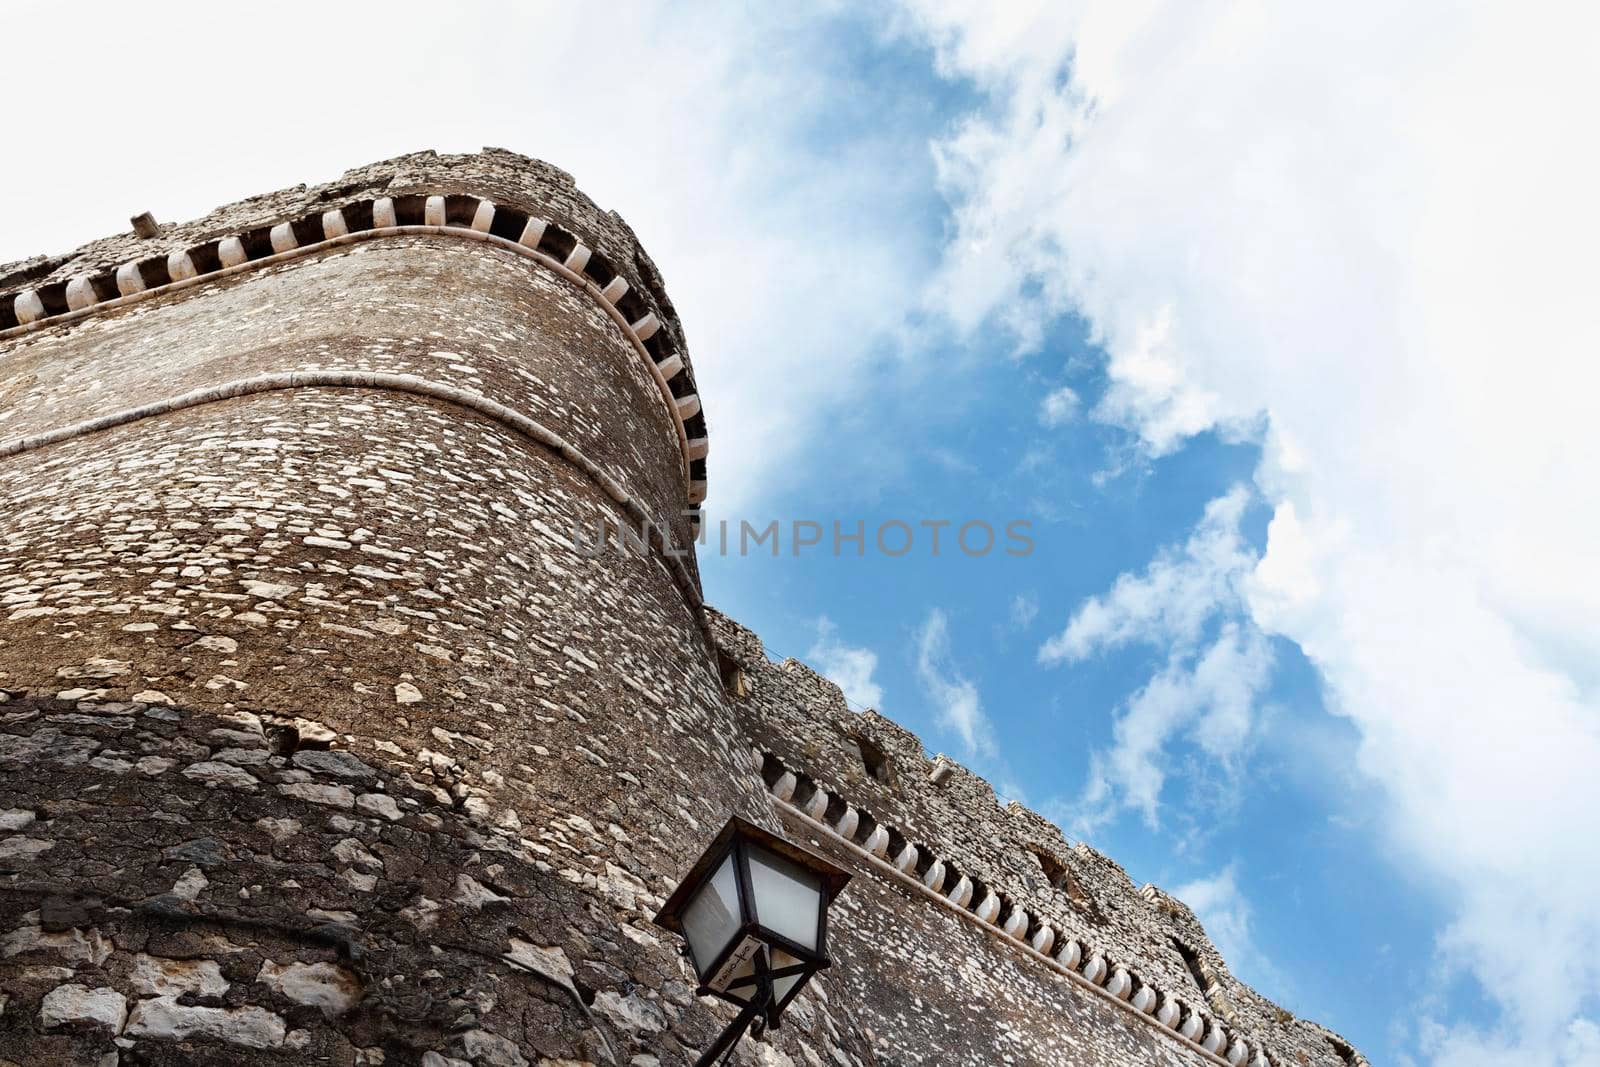 Medieval Caetani castle in Sermoneta , Italy by victimewalker